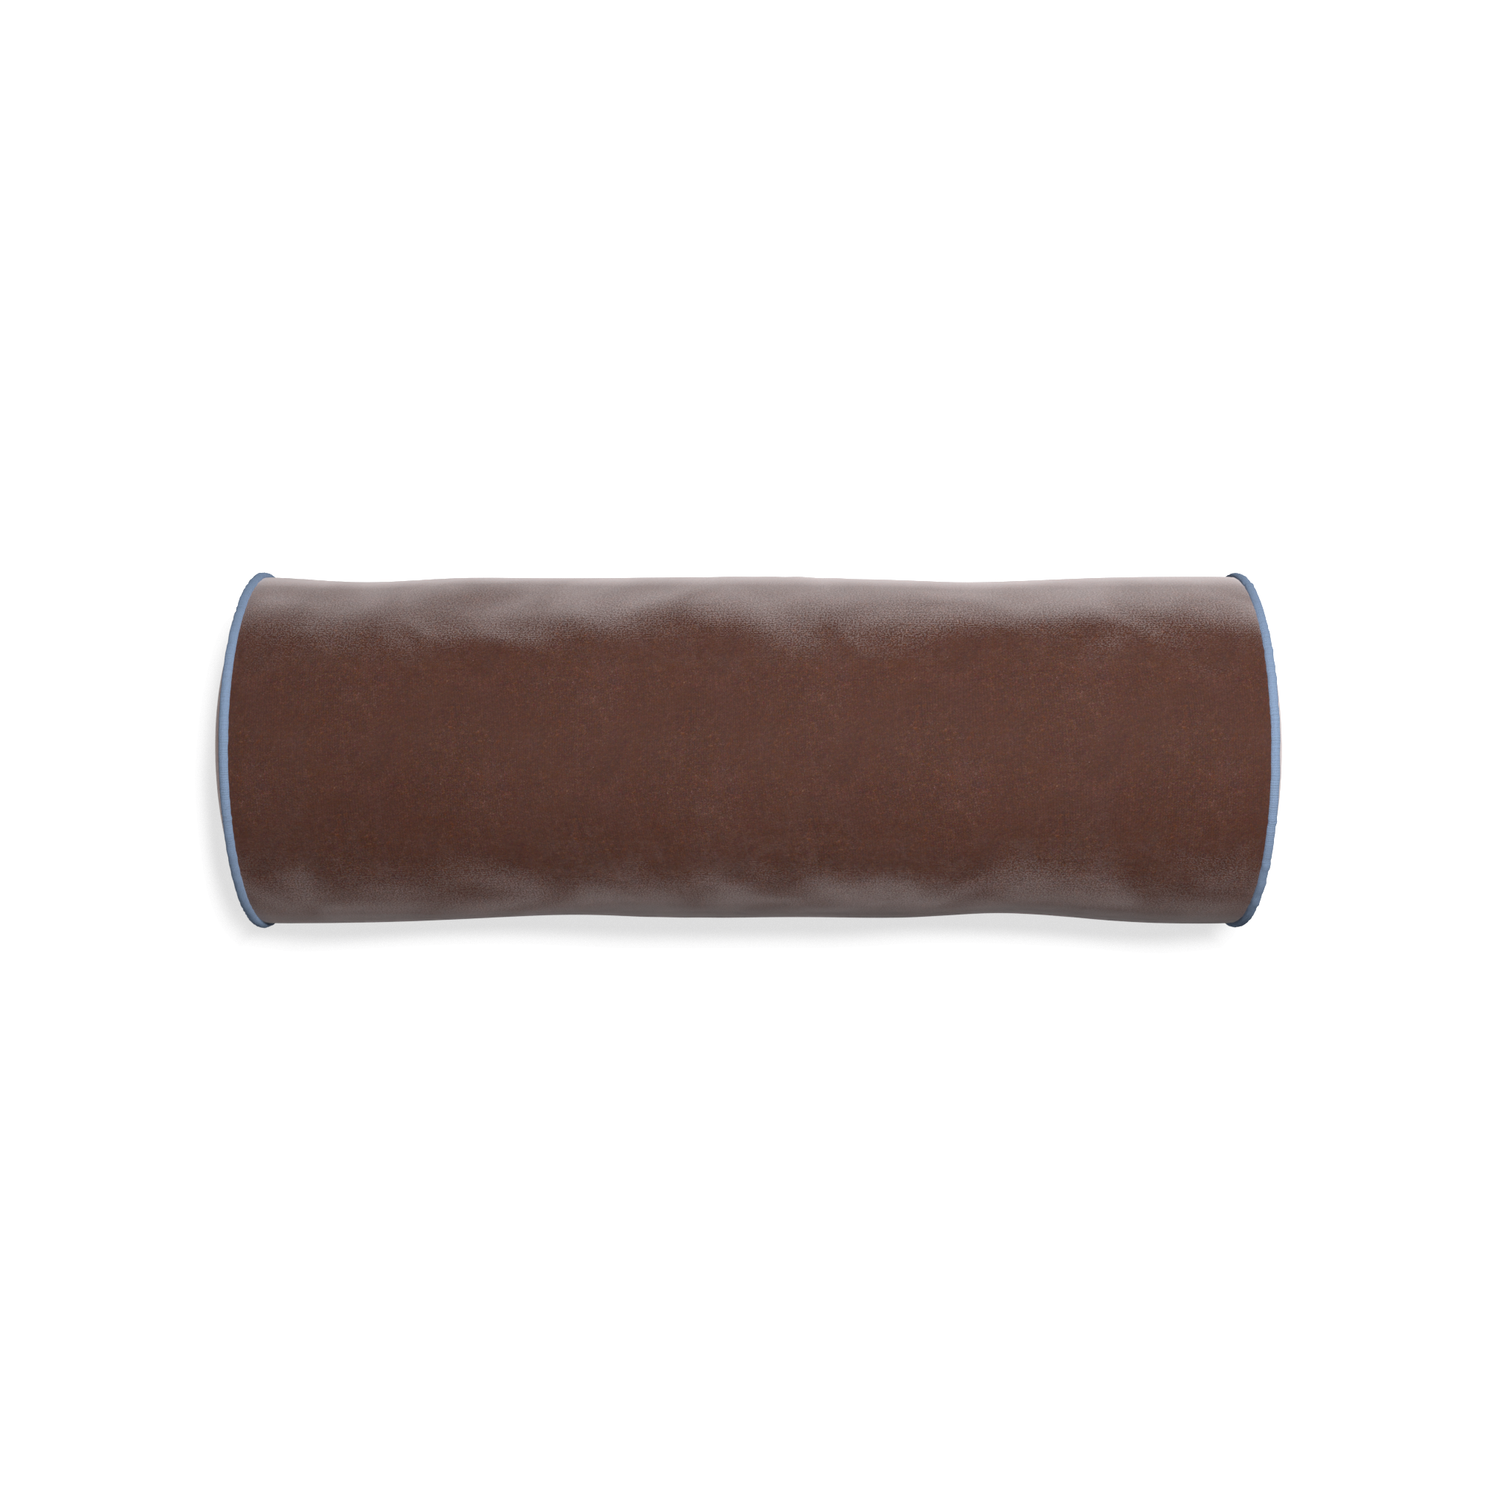 bolster brown velvet pillow with sky blue piping